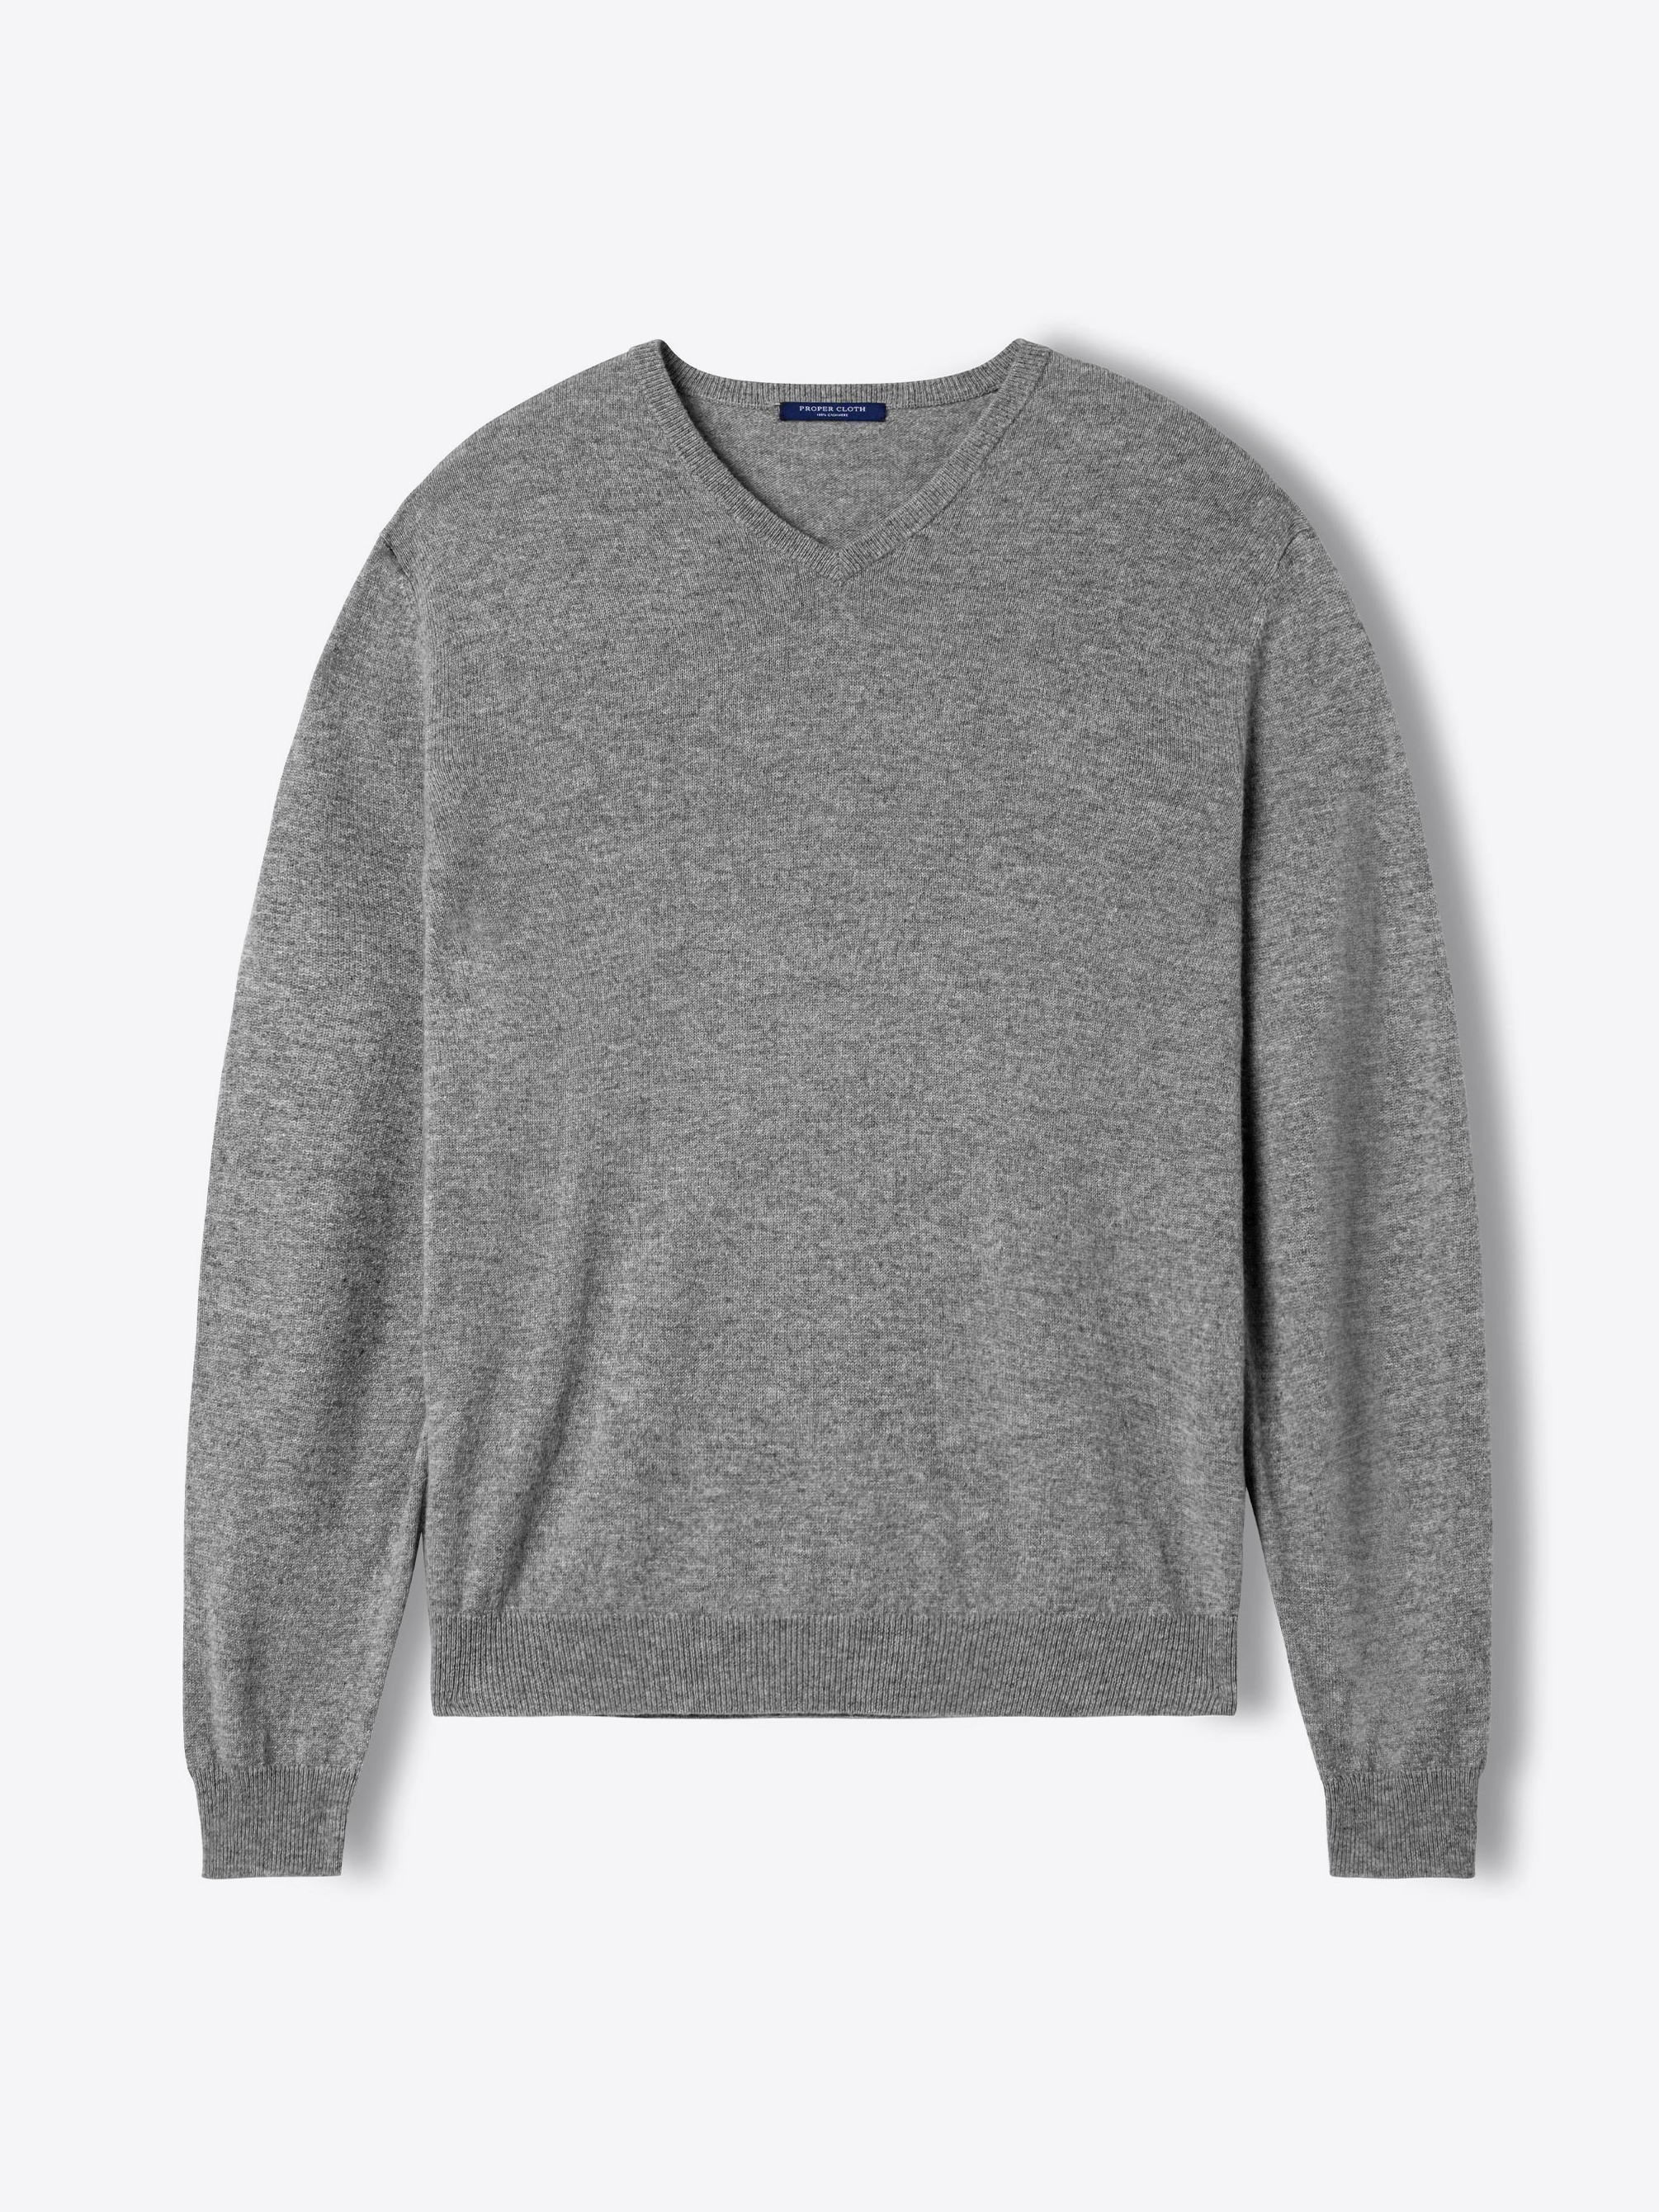 Zoom Image of Grey Cashmere V-Neck Sweater